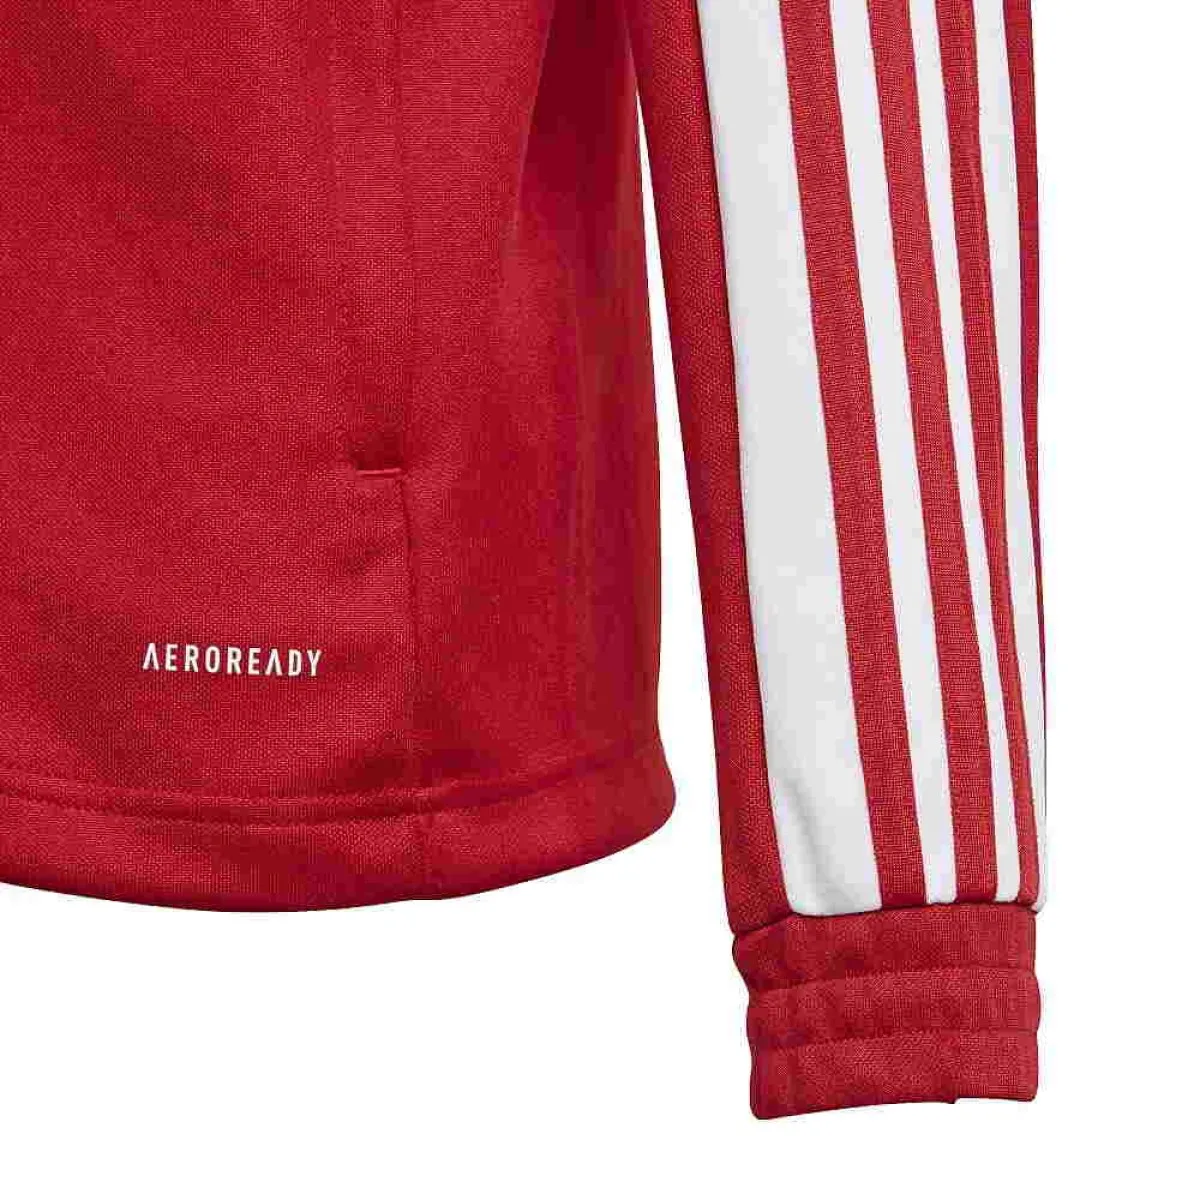 adidas Squadra 21 Kinder Trainingsjacke rot/weiß